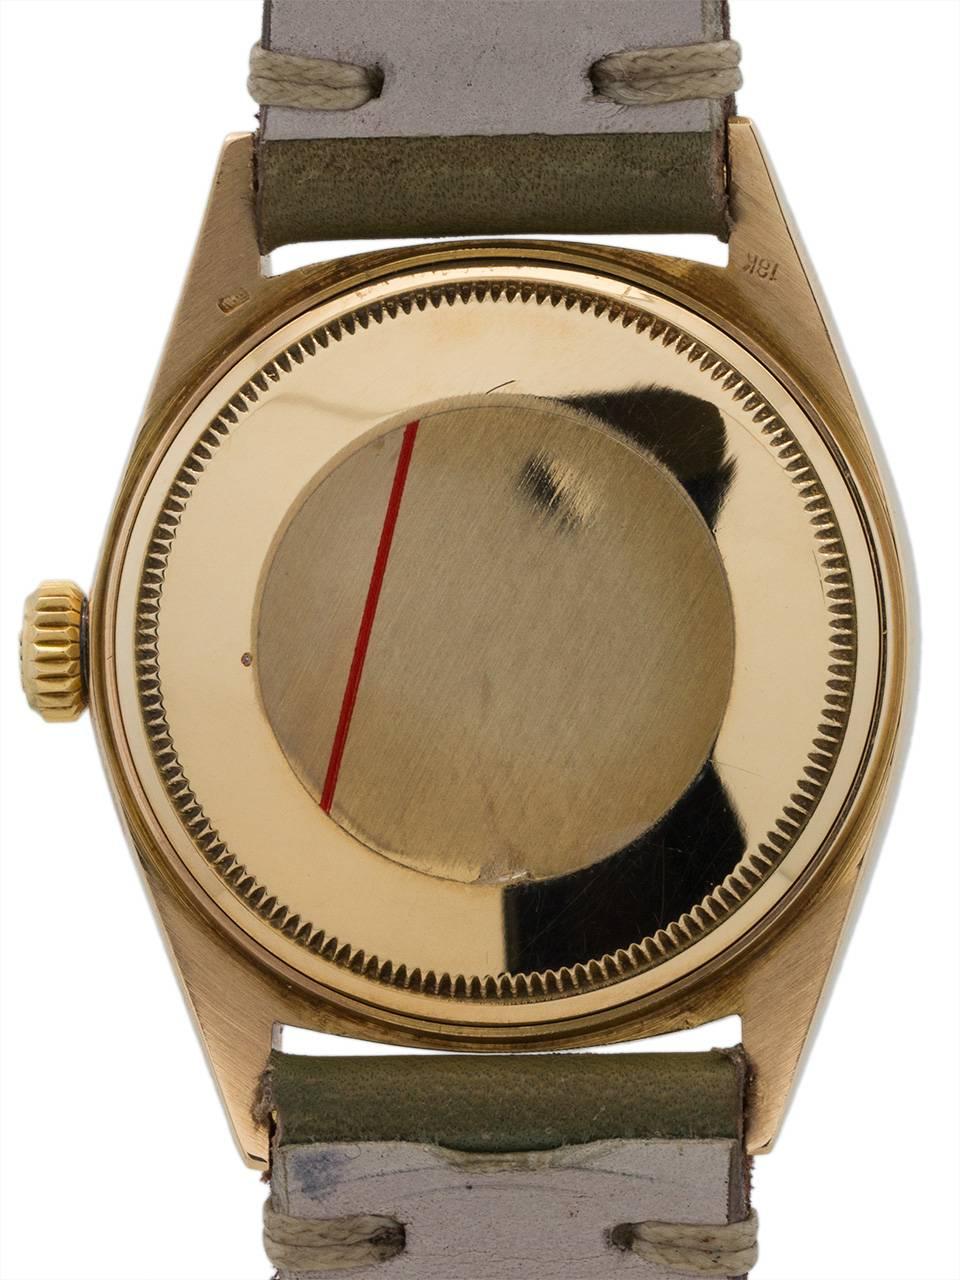 Men's Rolex Yellow Gold Datejust Self Winding Wristwatch Ref 1601, circa 1970